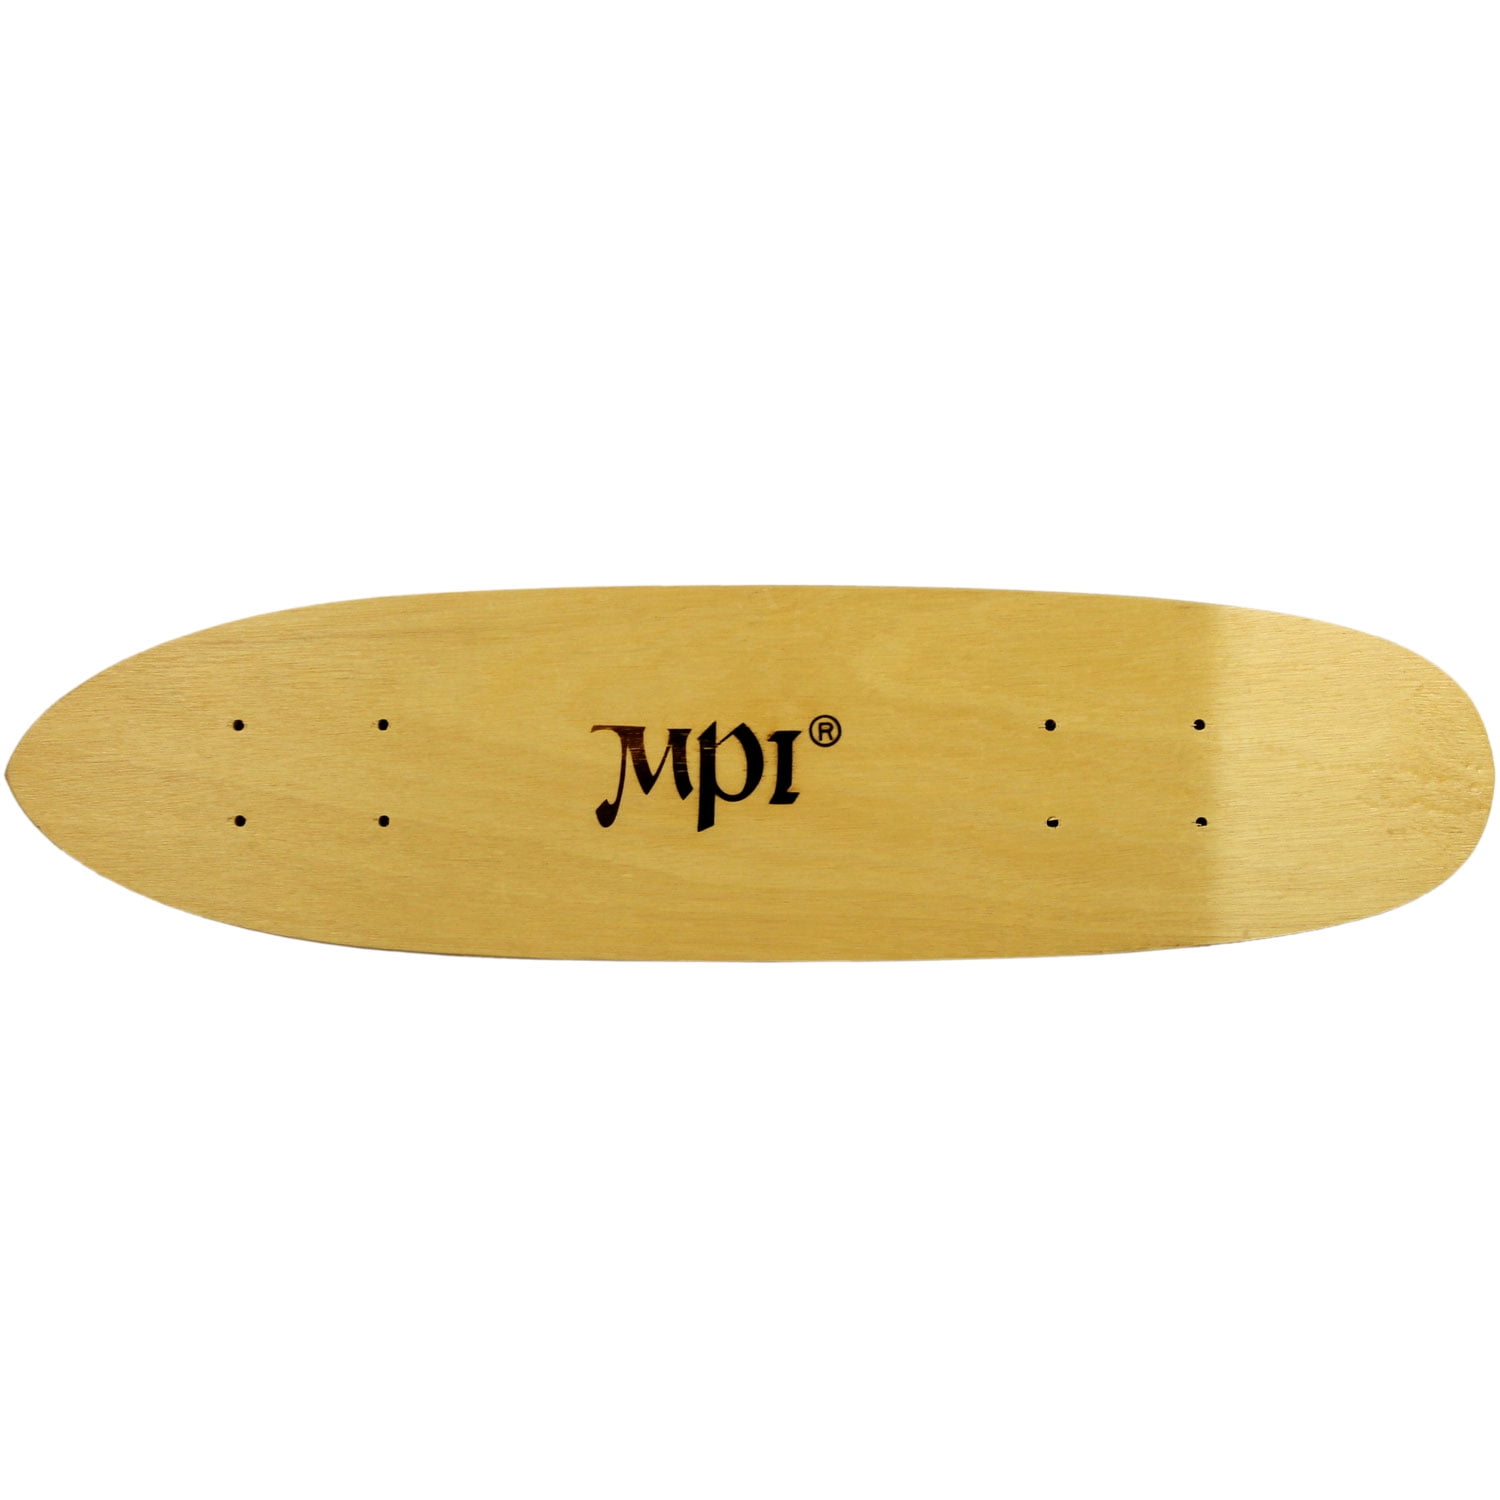 MPI NOS Mahagoni Skateboard Deck